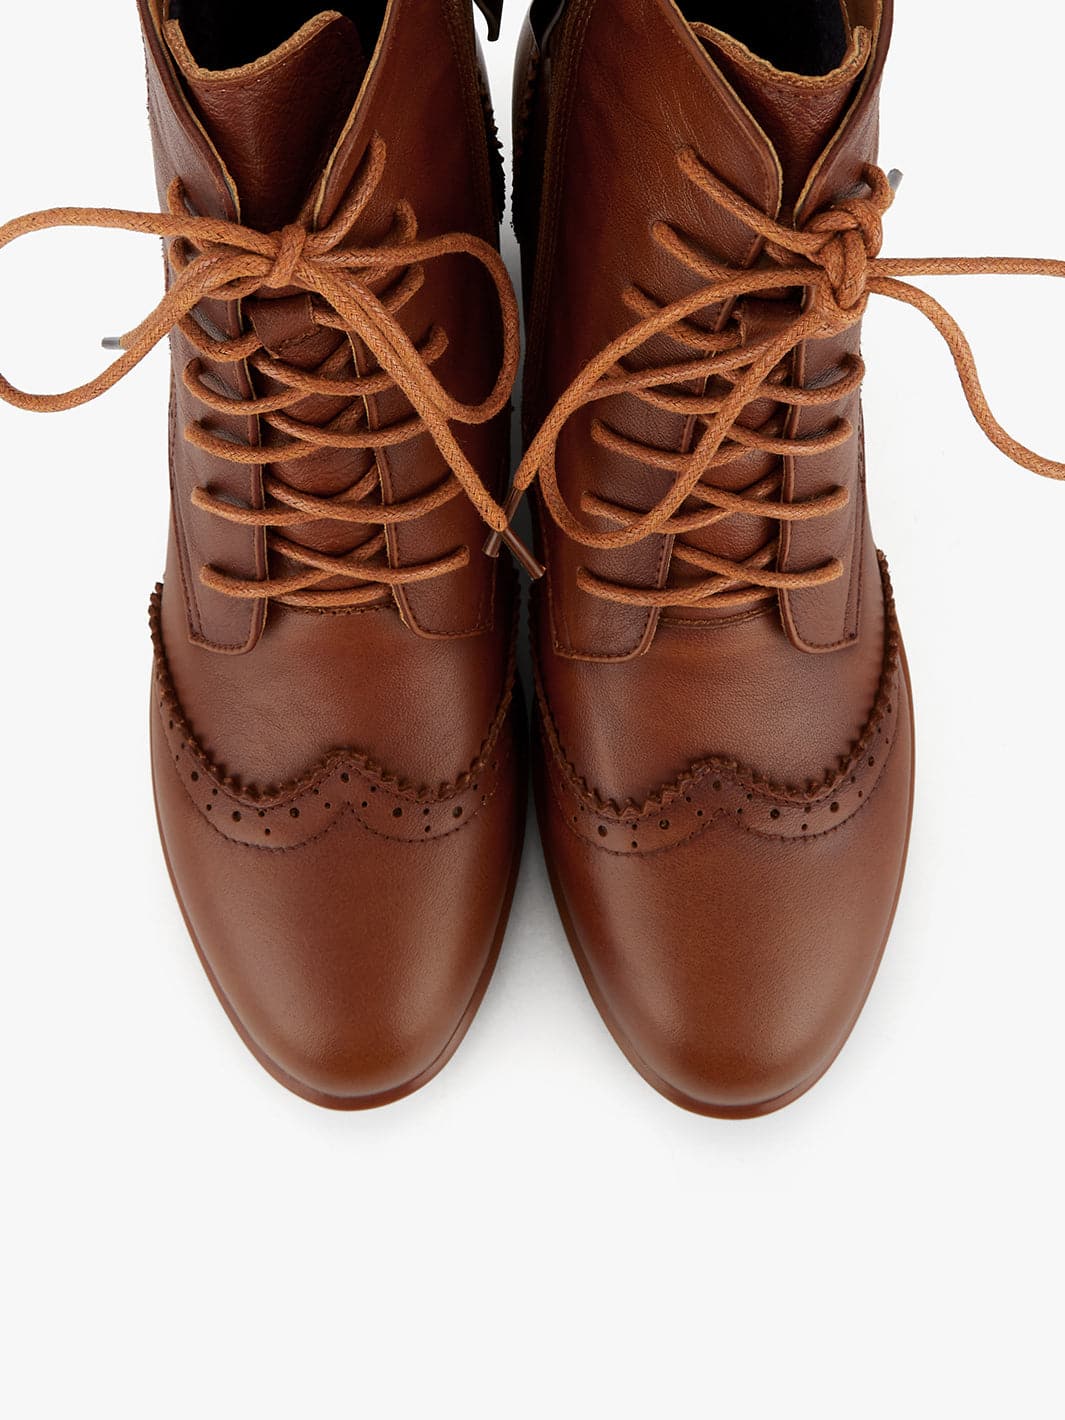 Vintage Martin boots